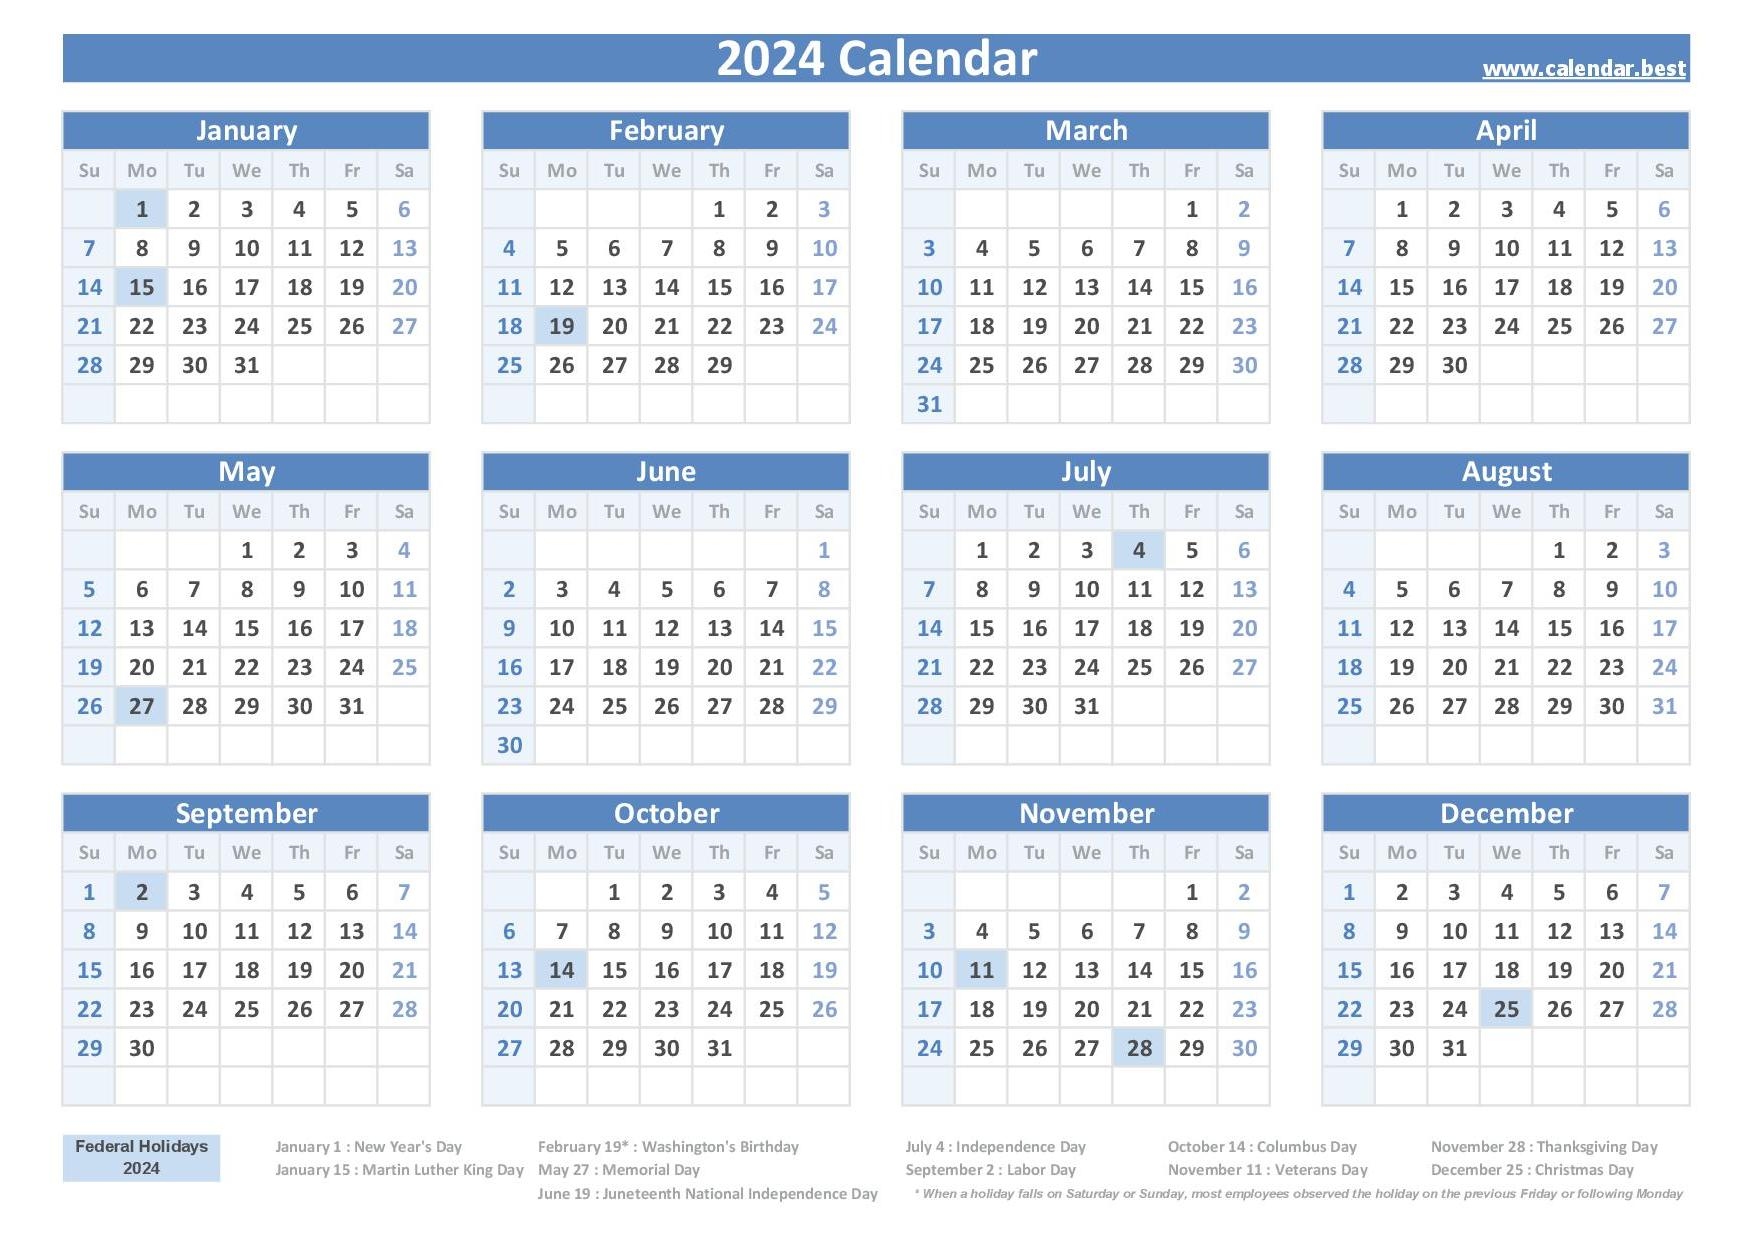 2024 Us Federal Holiday Calendar Printable Bill Marjie - Free Printable 2024 Calendar With Holidays Pdf